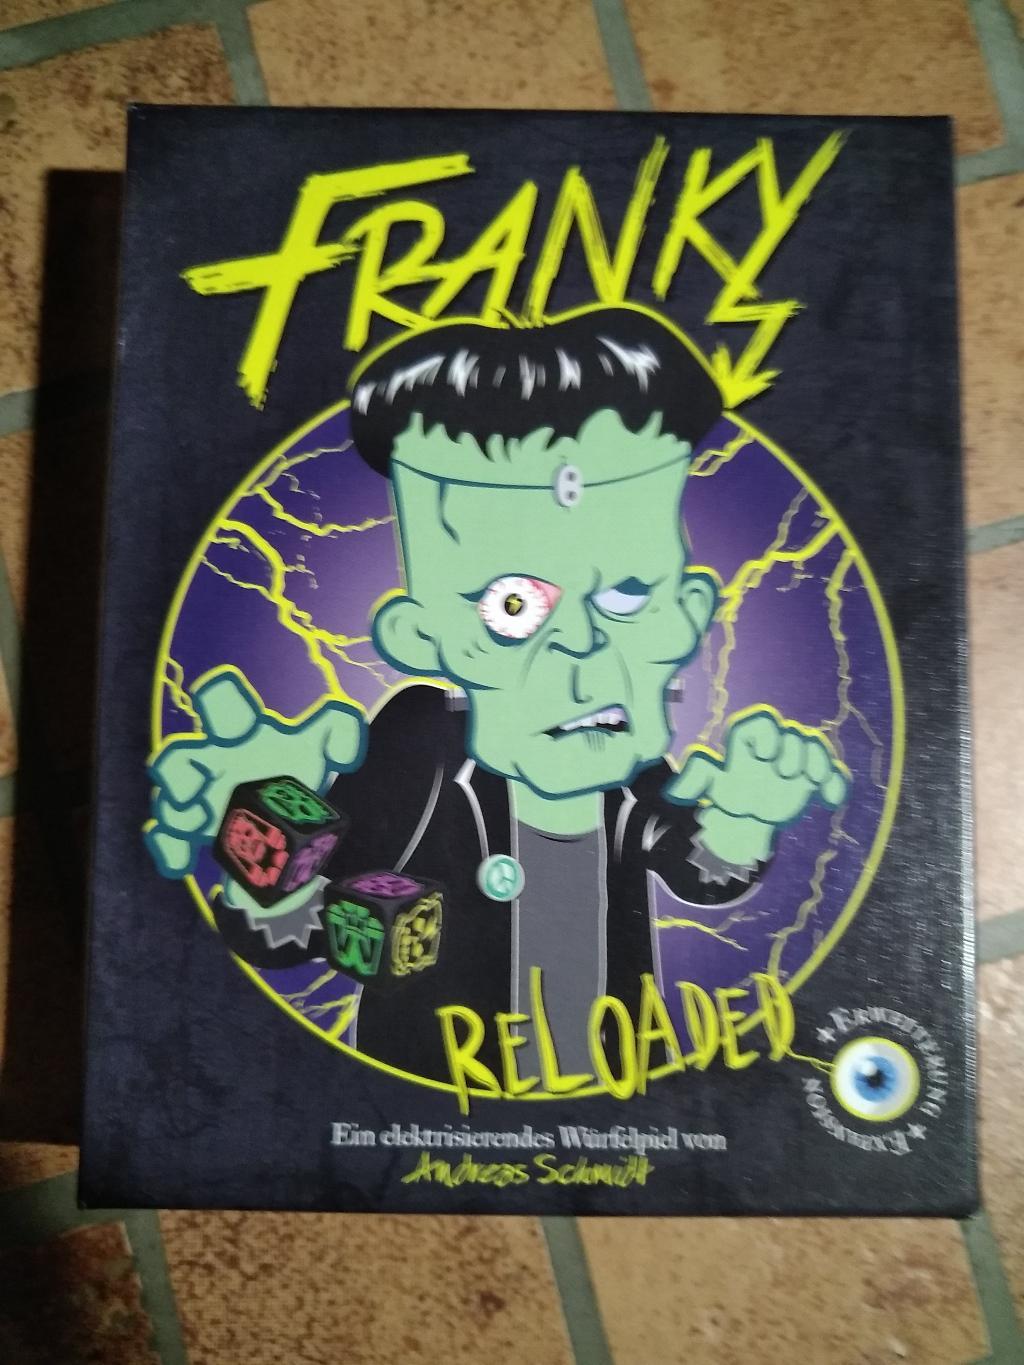 Franky Reloaded